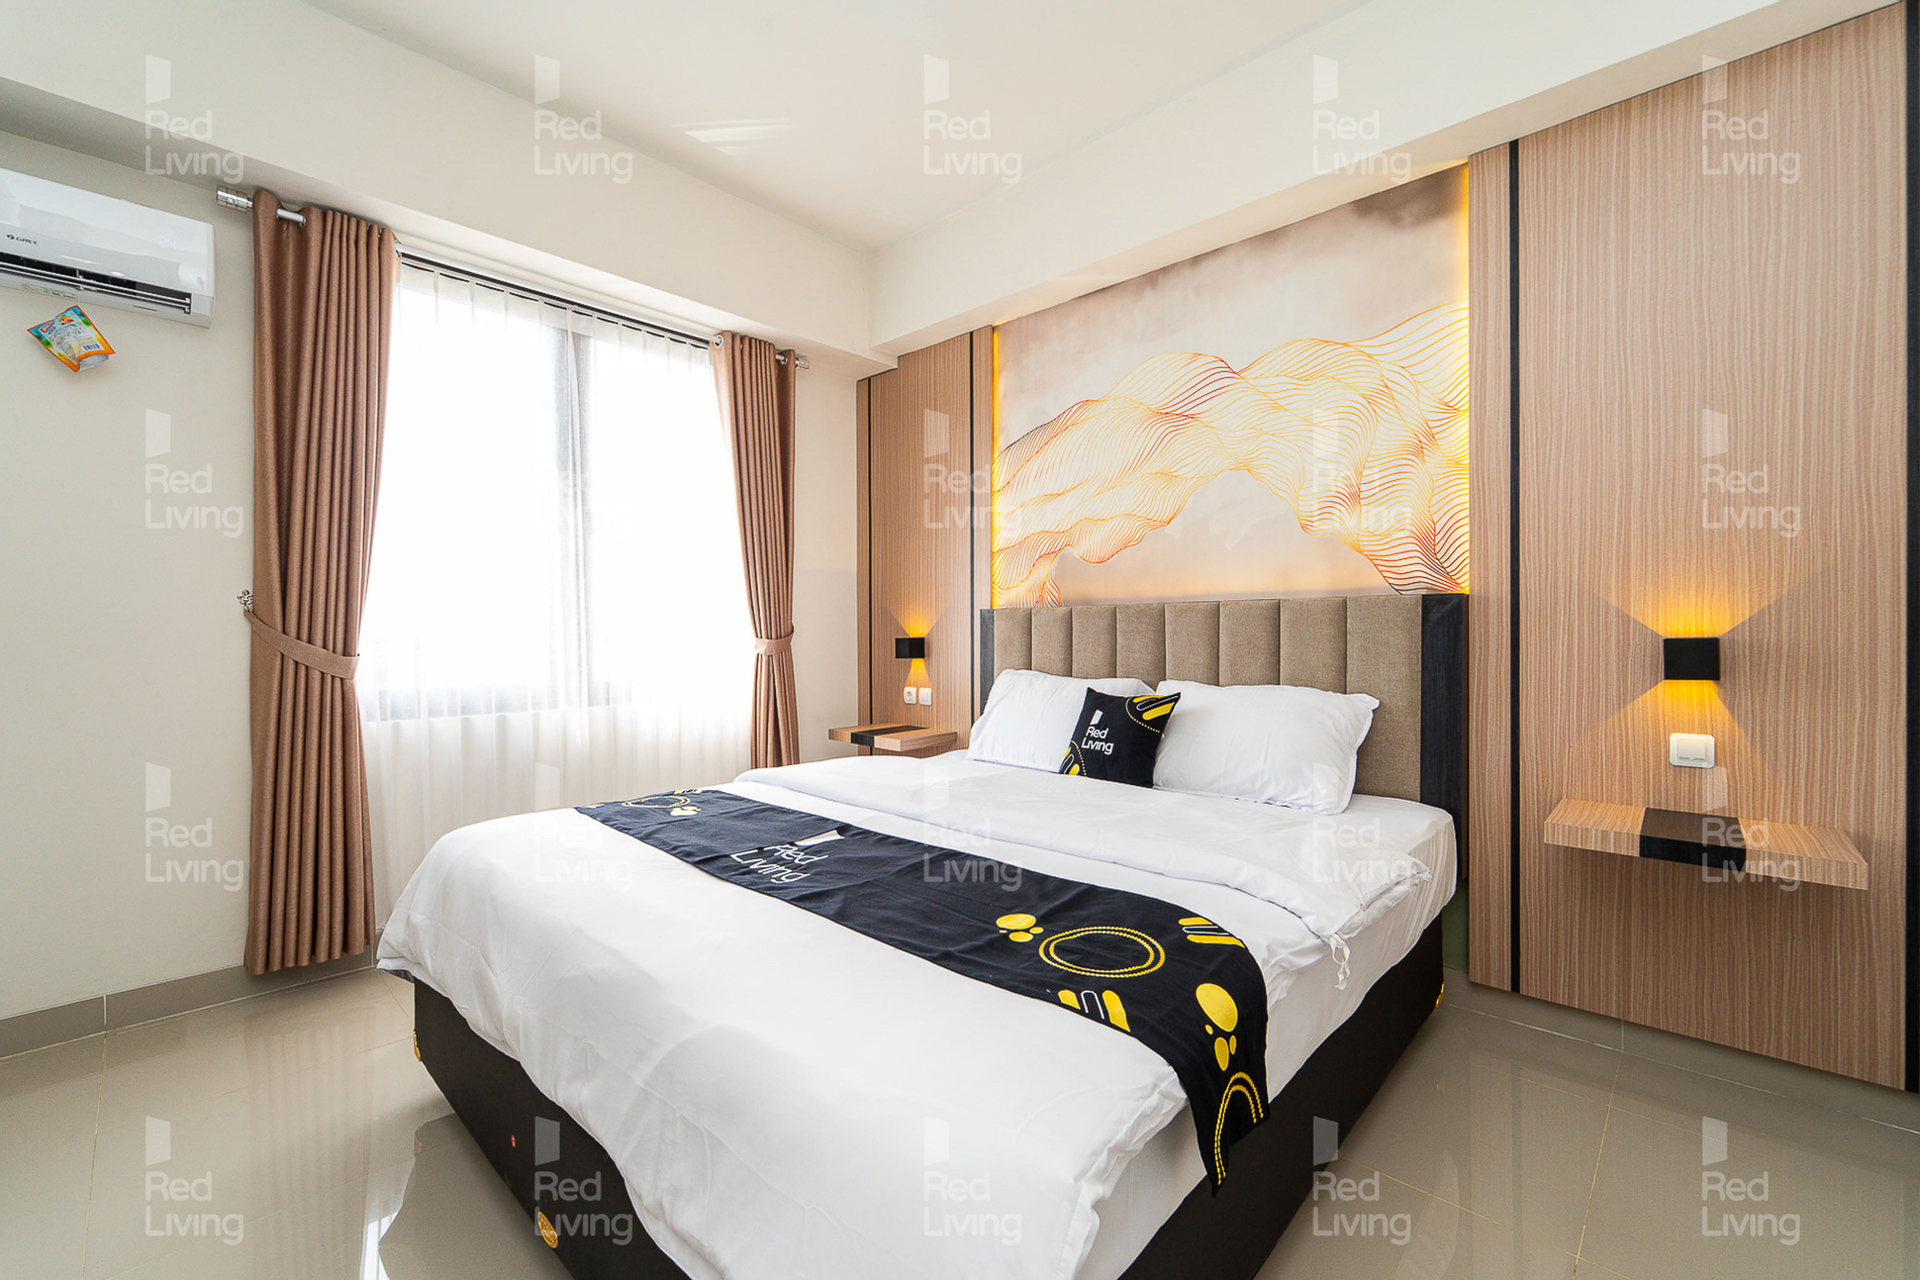 RedLiving Comfort Studio - Apartemen Premium Exclusive Seturan with Netflix, Yogyakarta